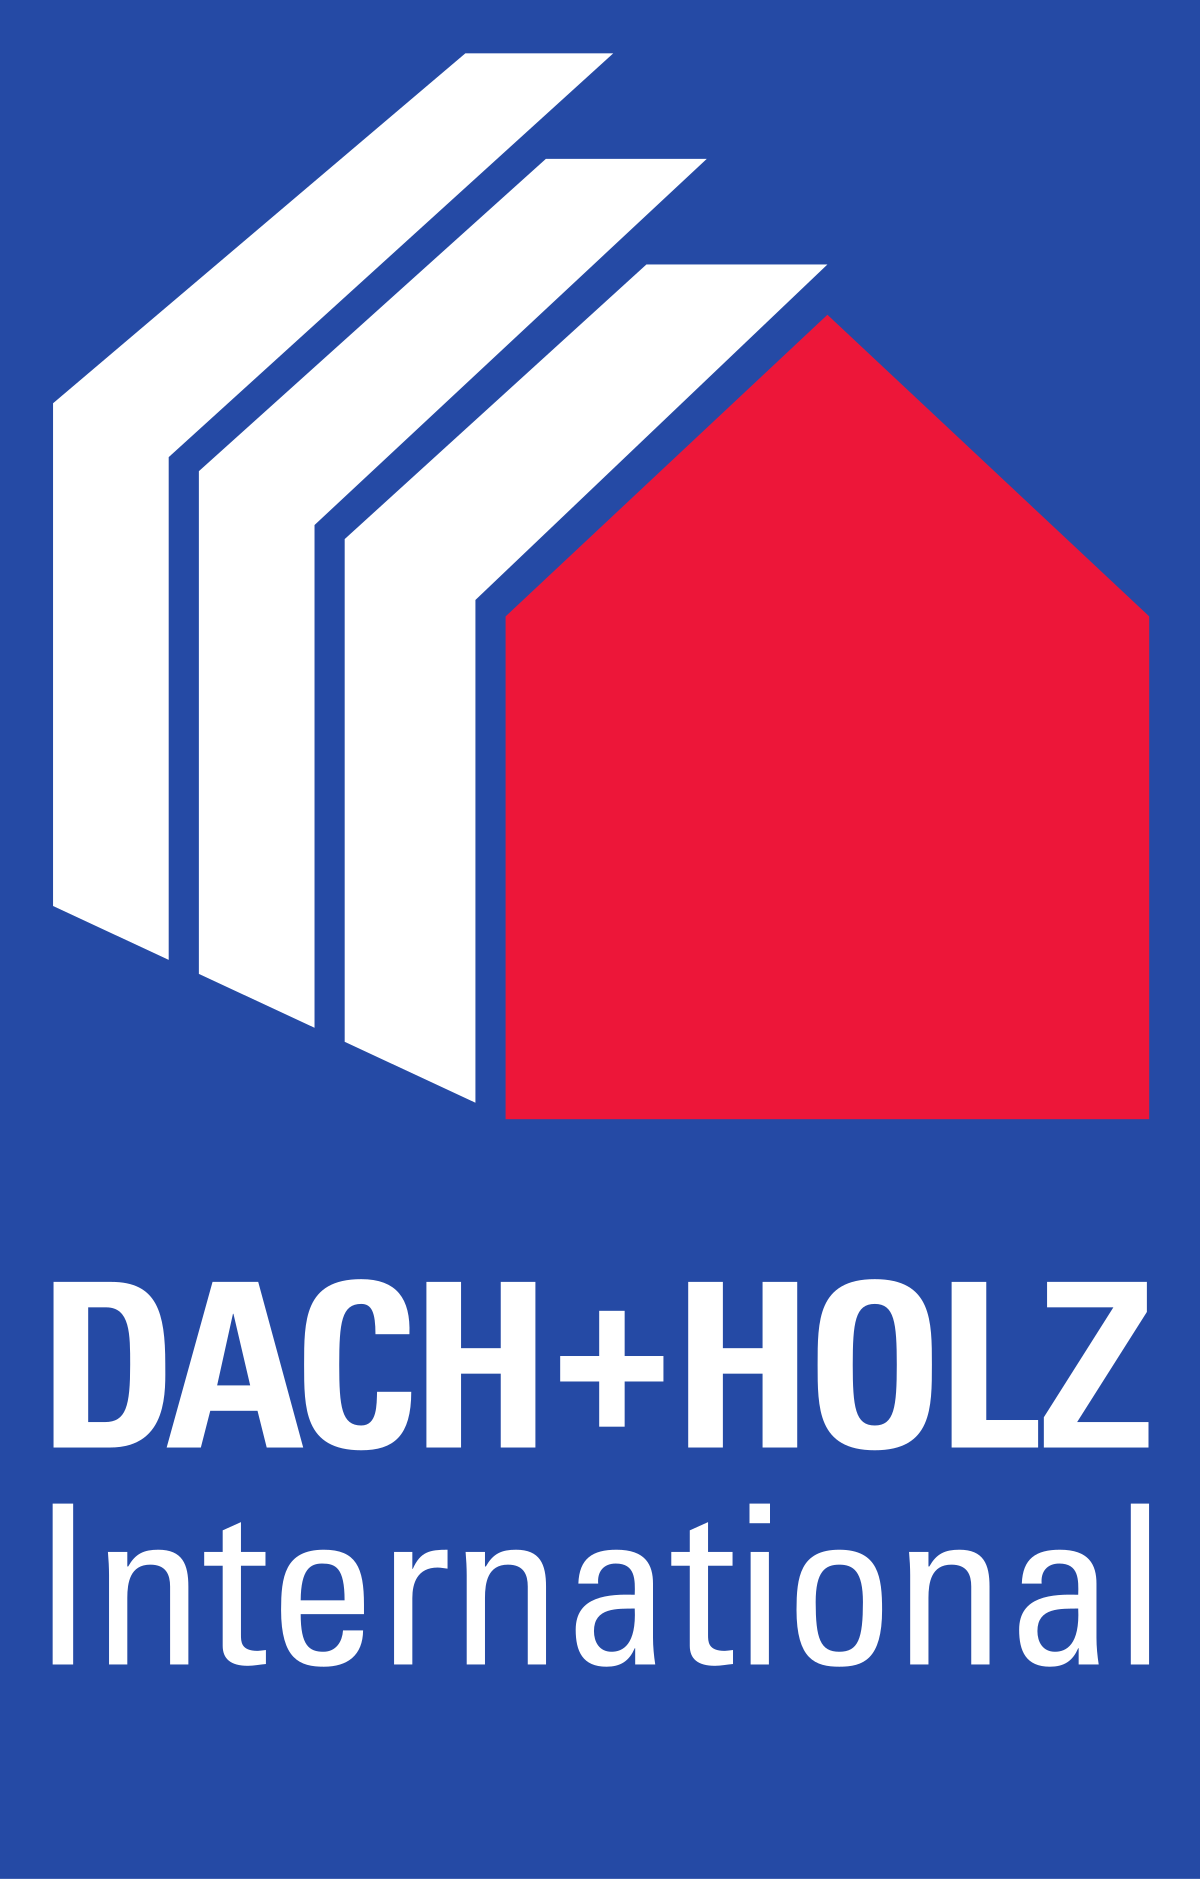 Dach_holz_logo-svg